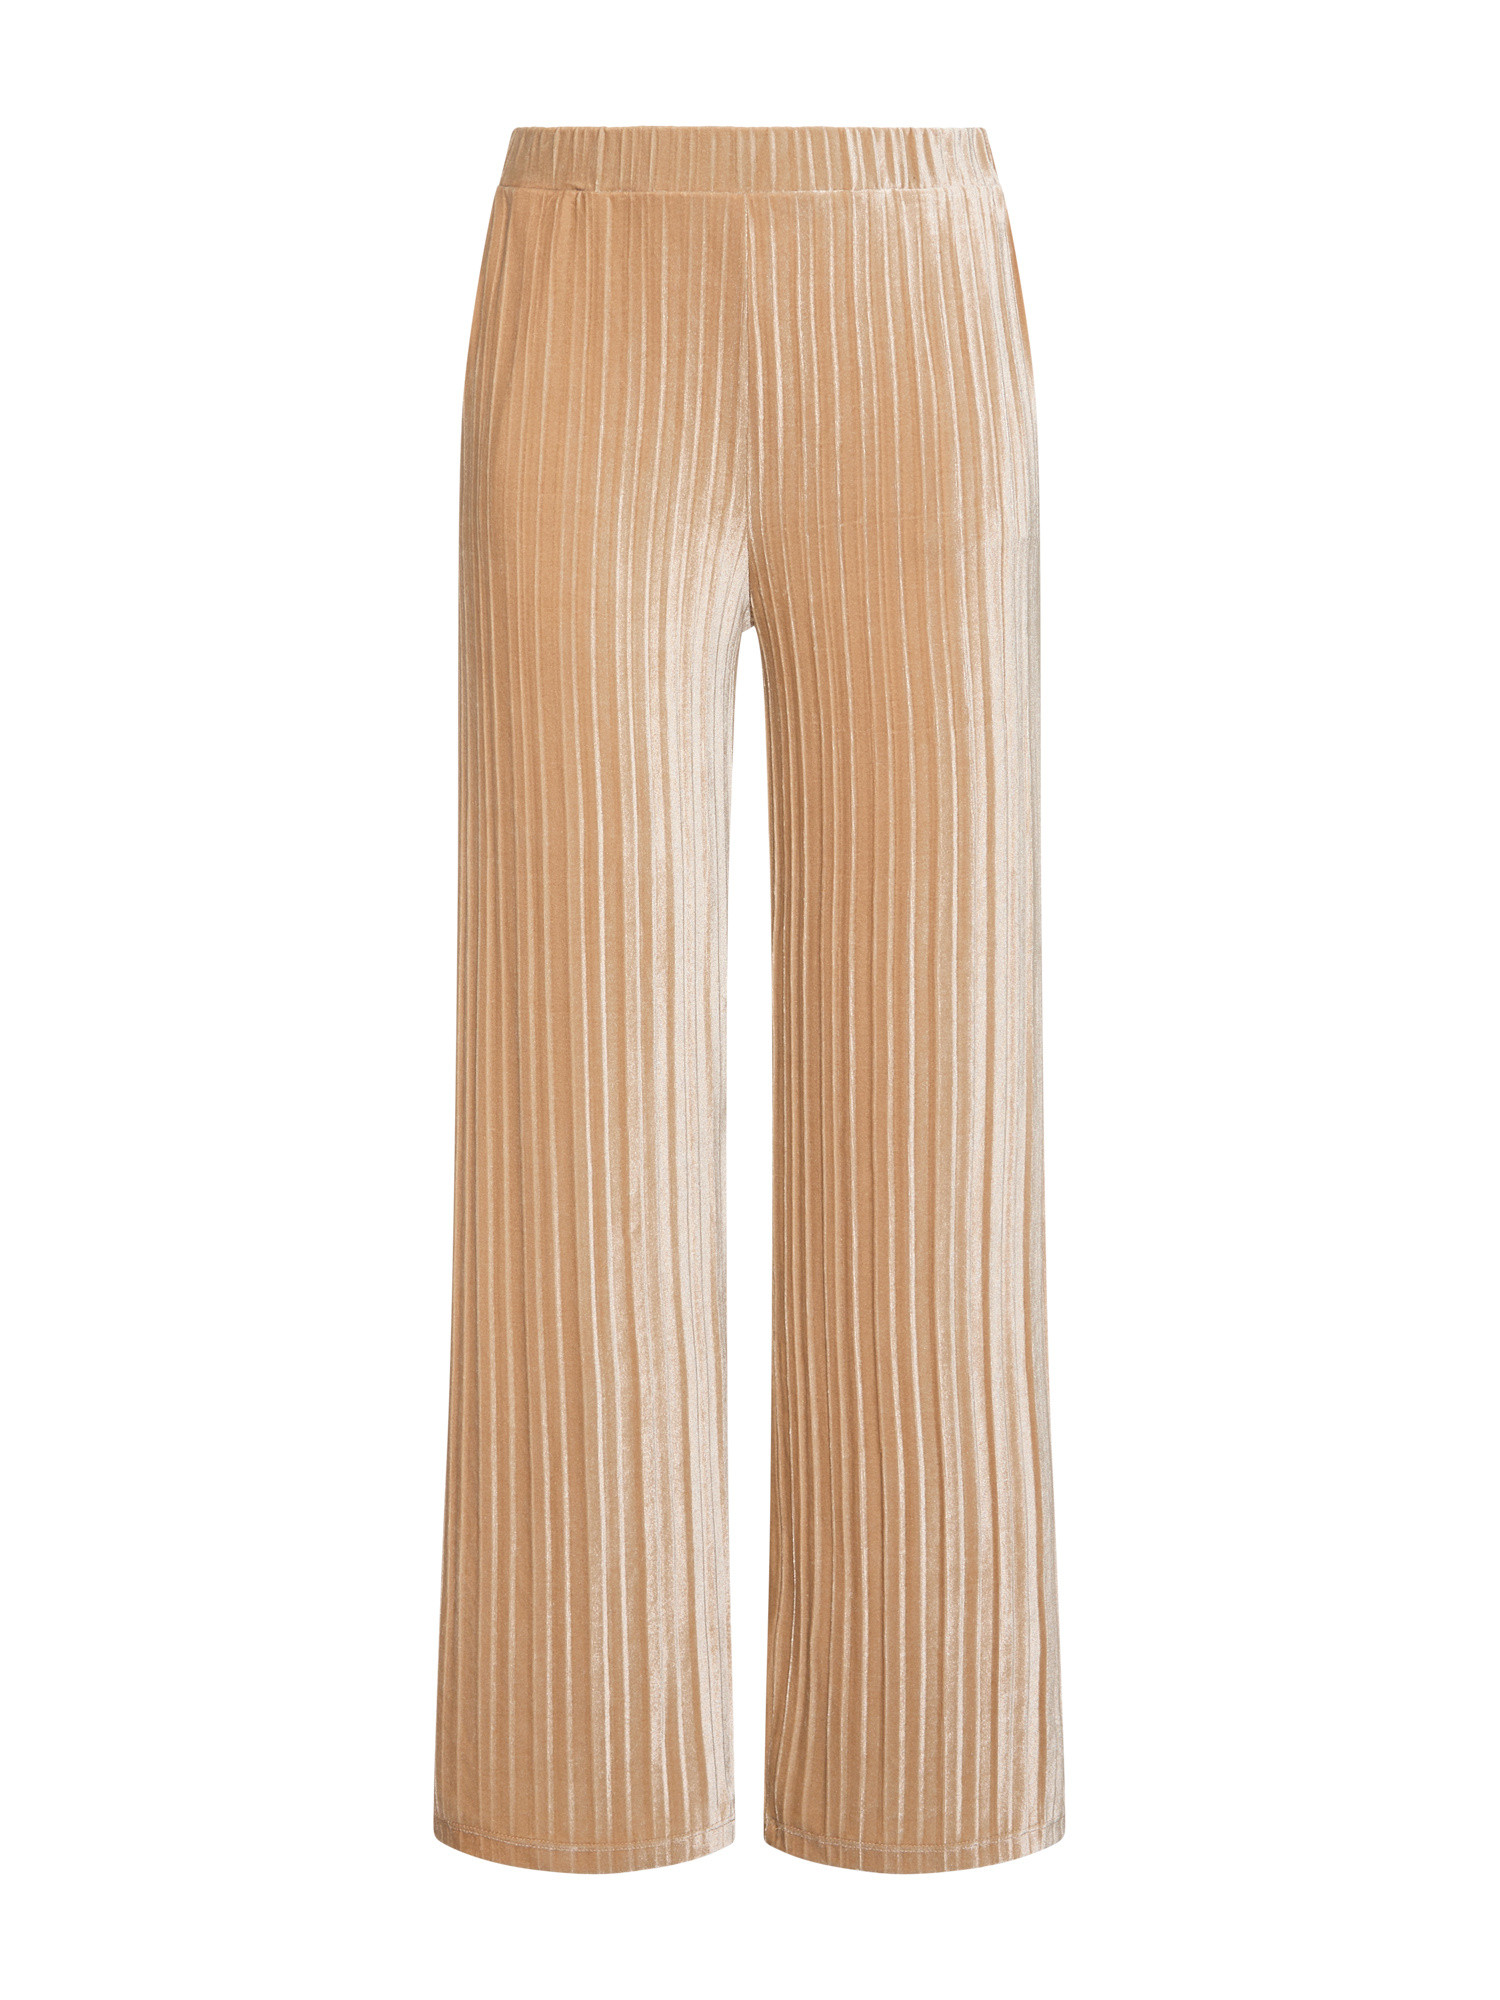 Koan Knitwear Широкие брюки из бархата со складками., бледно-желтый